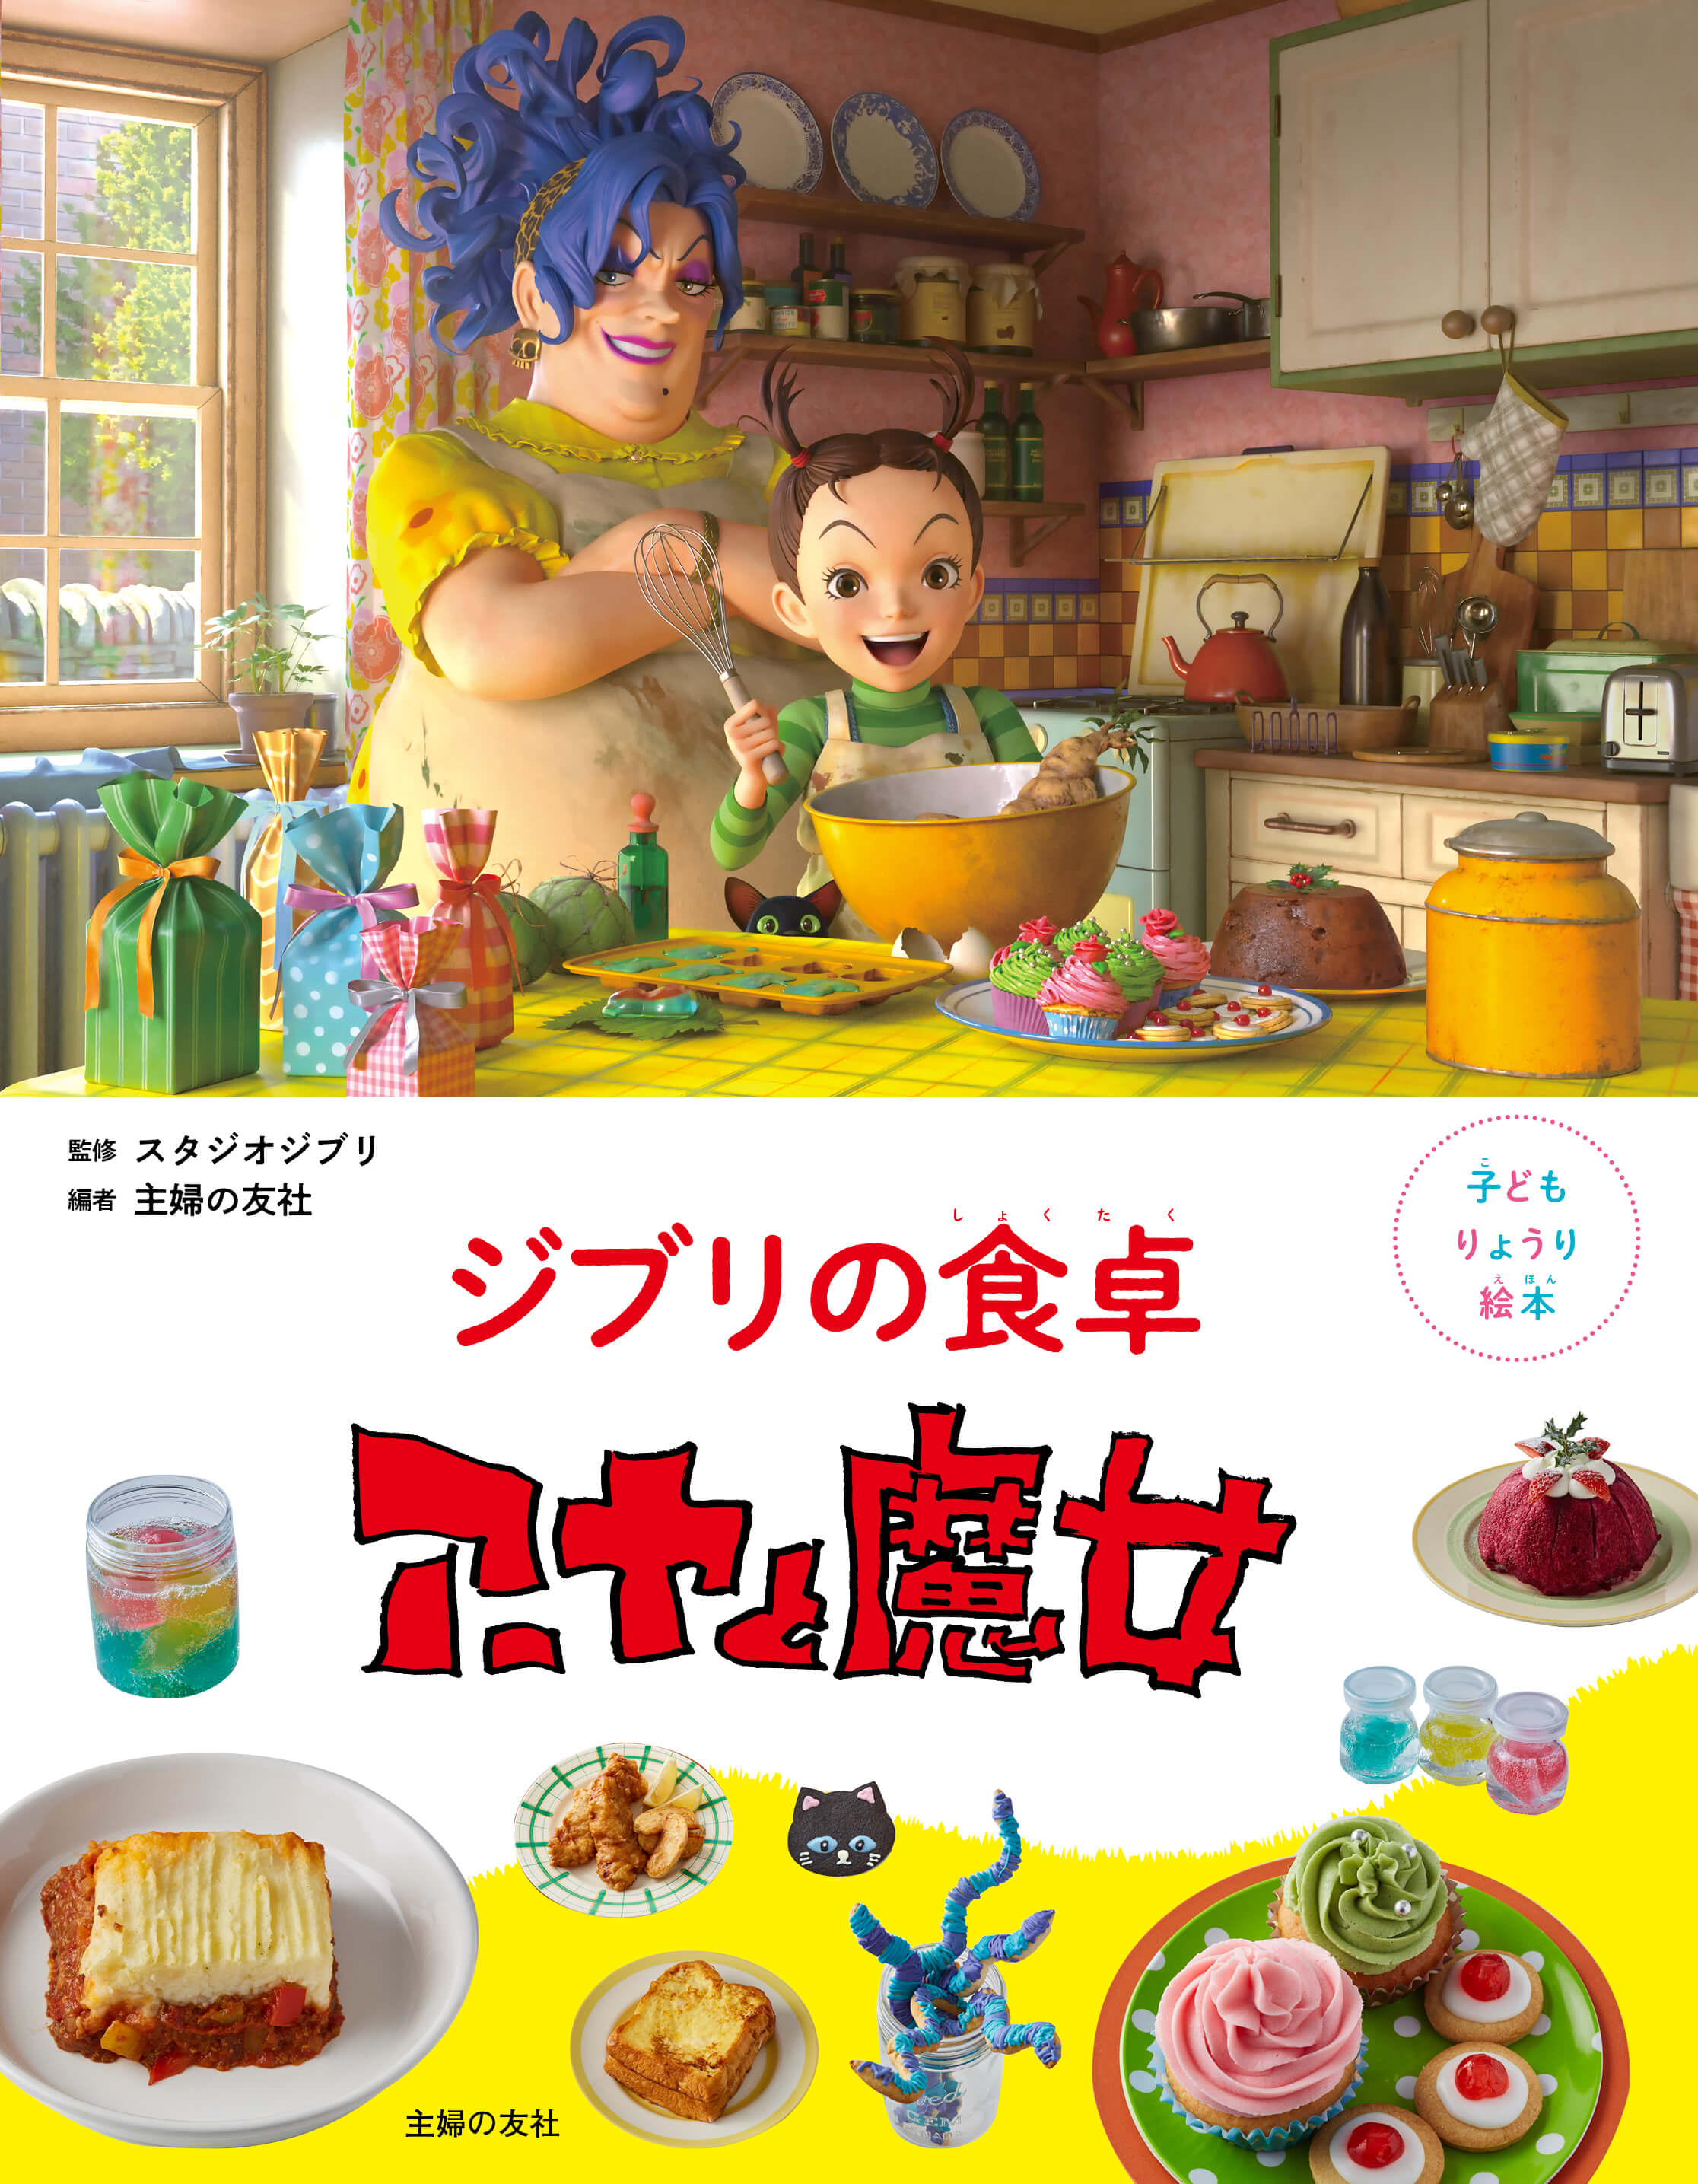 Studio Ghibli's Earwig and the Witch Gets Recipe Picture Book | MOSHI MOSHI  NIPPON | もしもしにっぽん